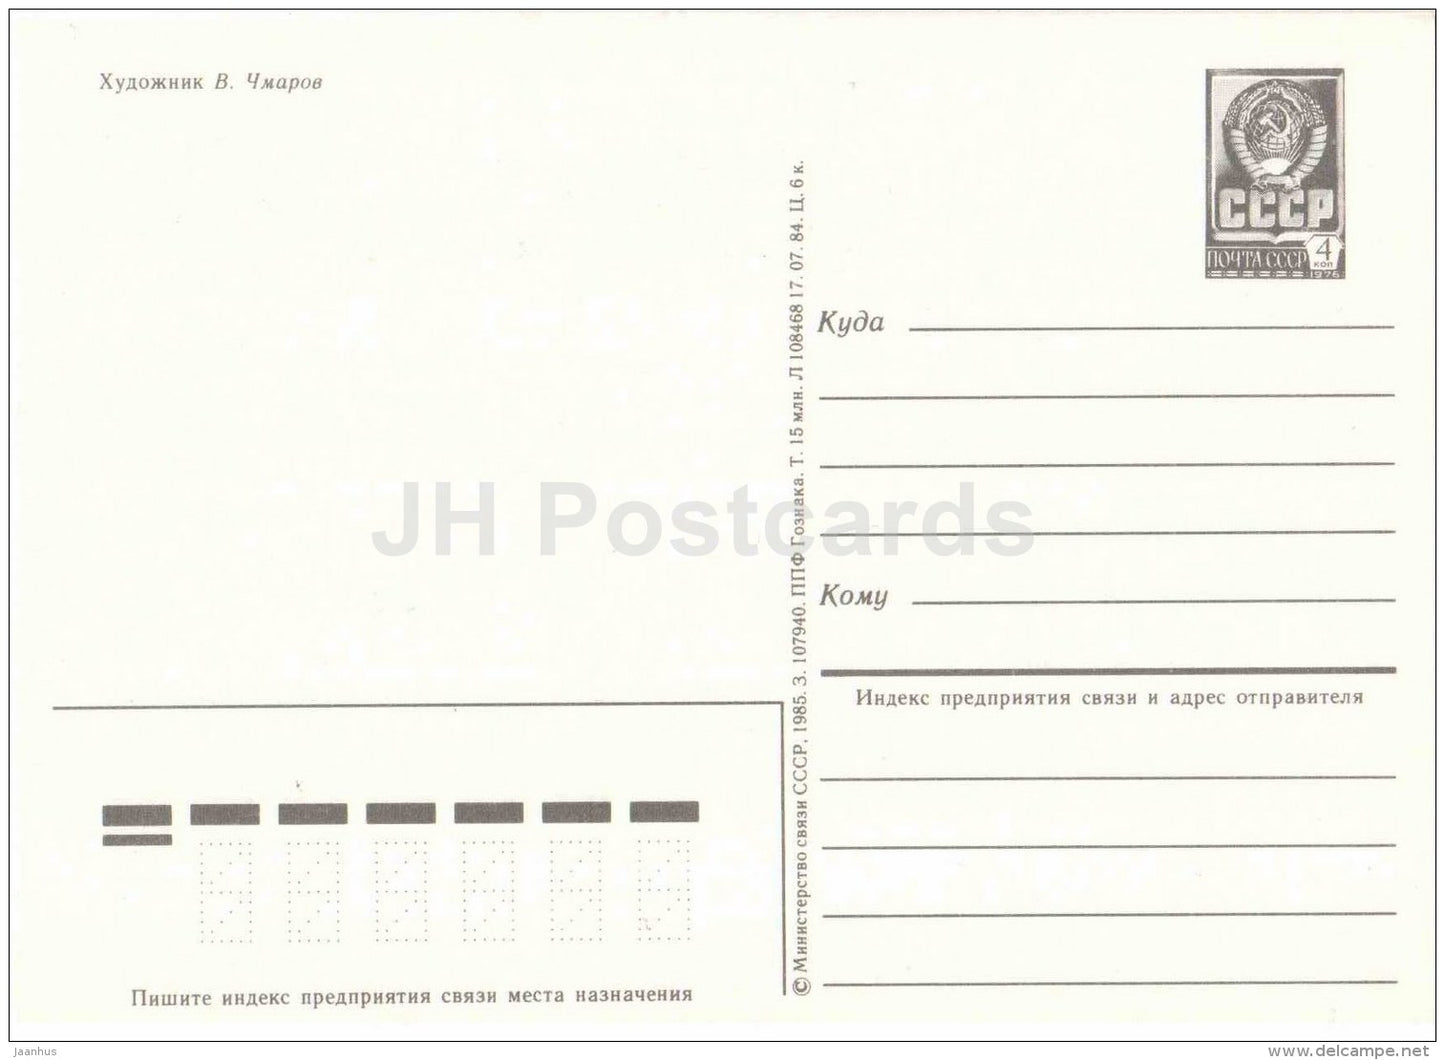 May 1 International Workers' Day greeting card - Kremlin - flowers - 1985 - Russia USSR - unused - JH Postcards